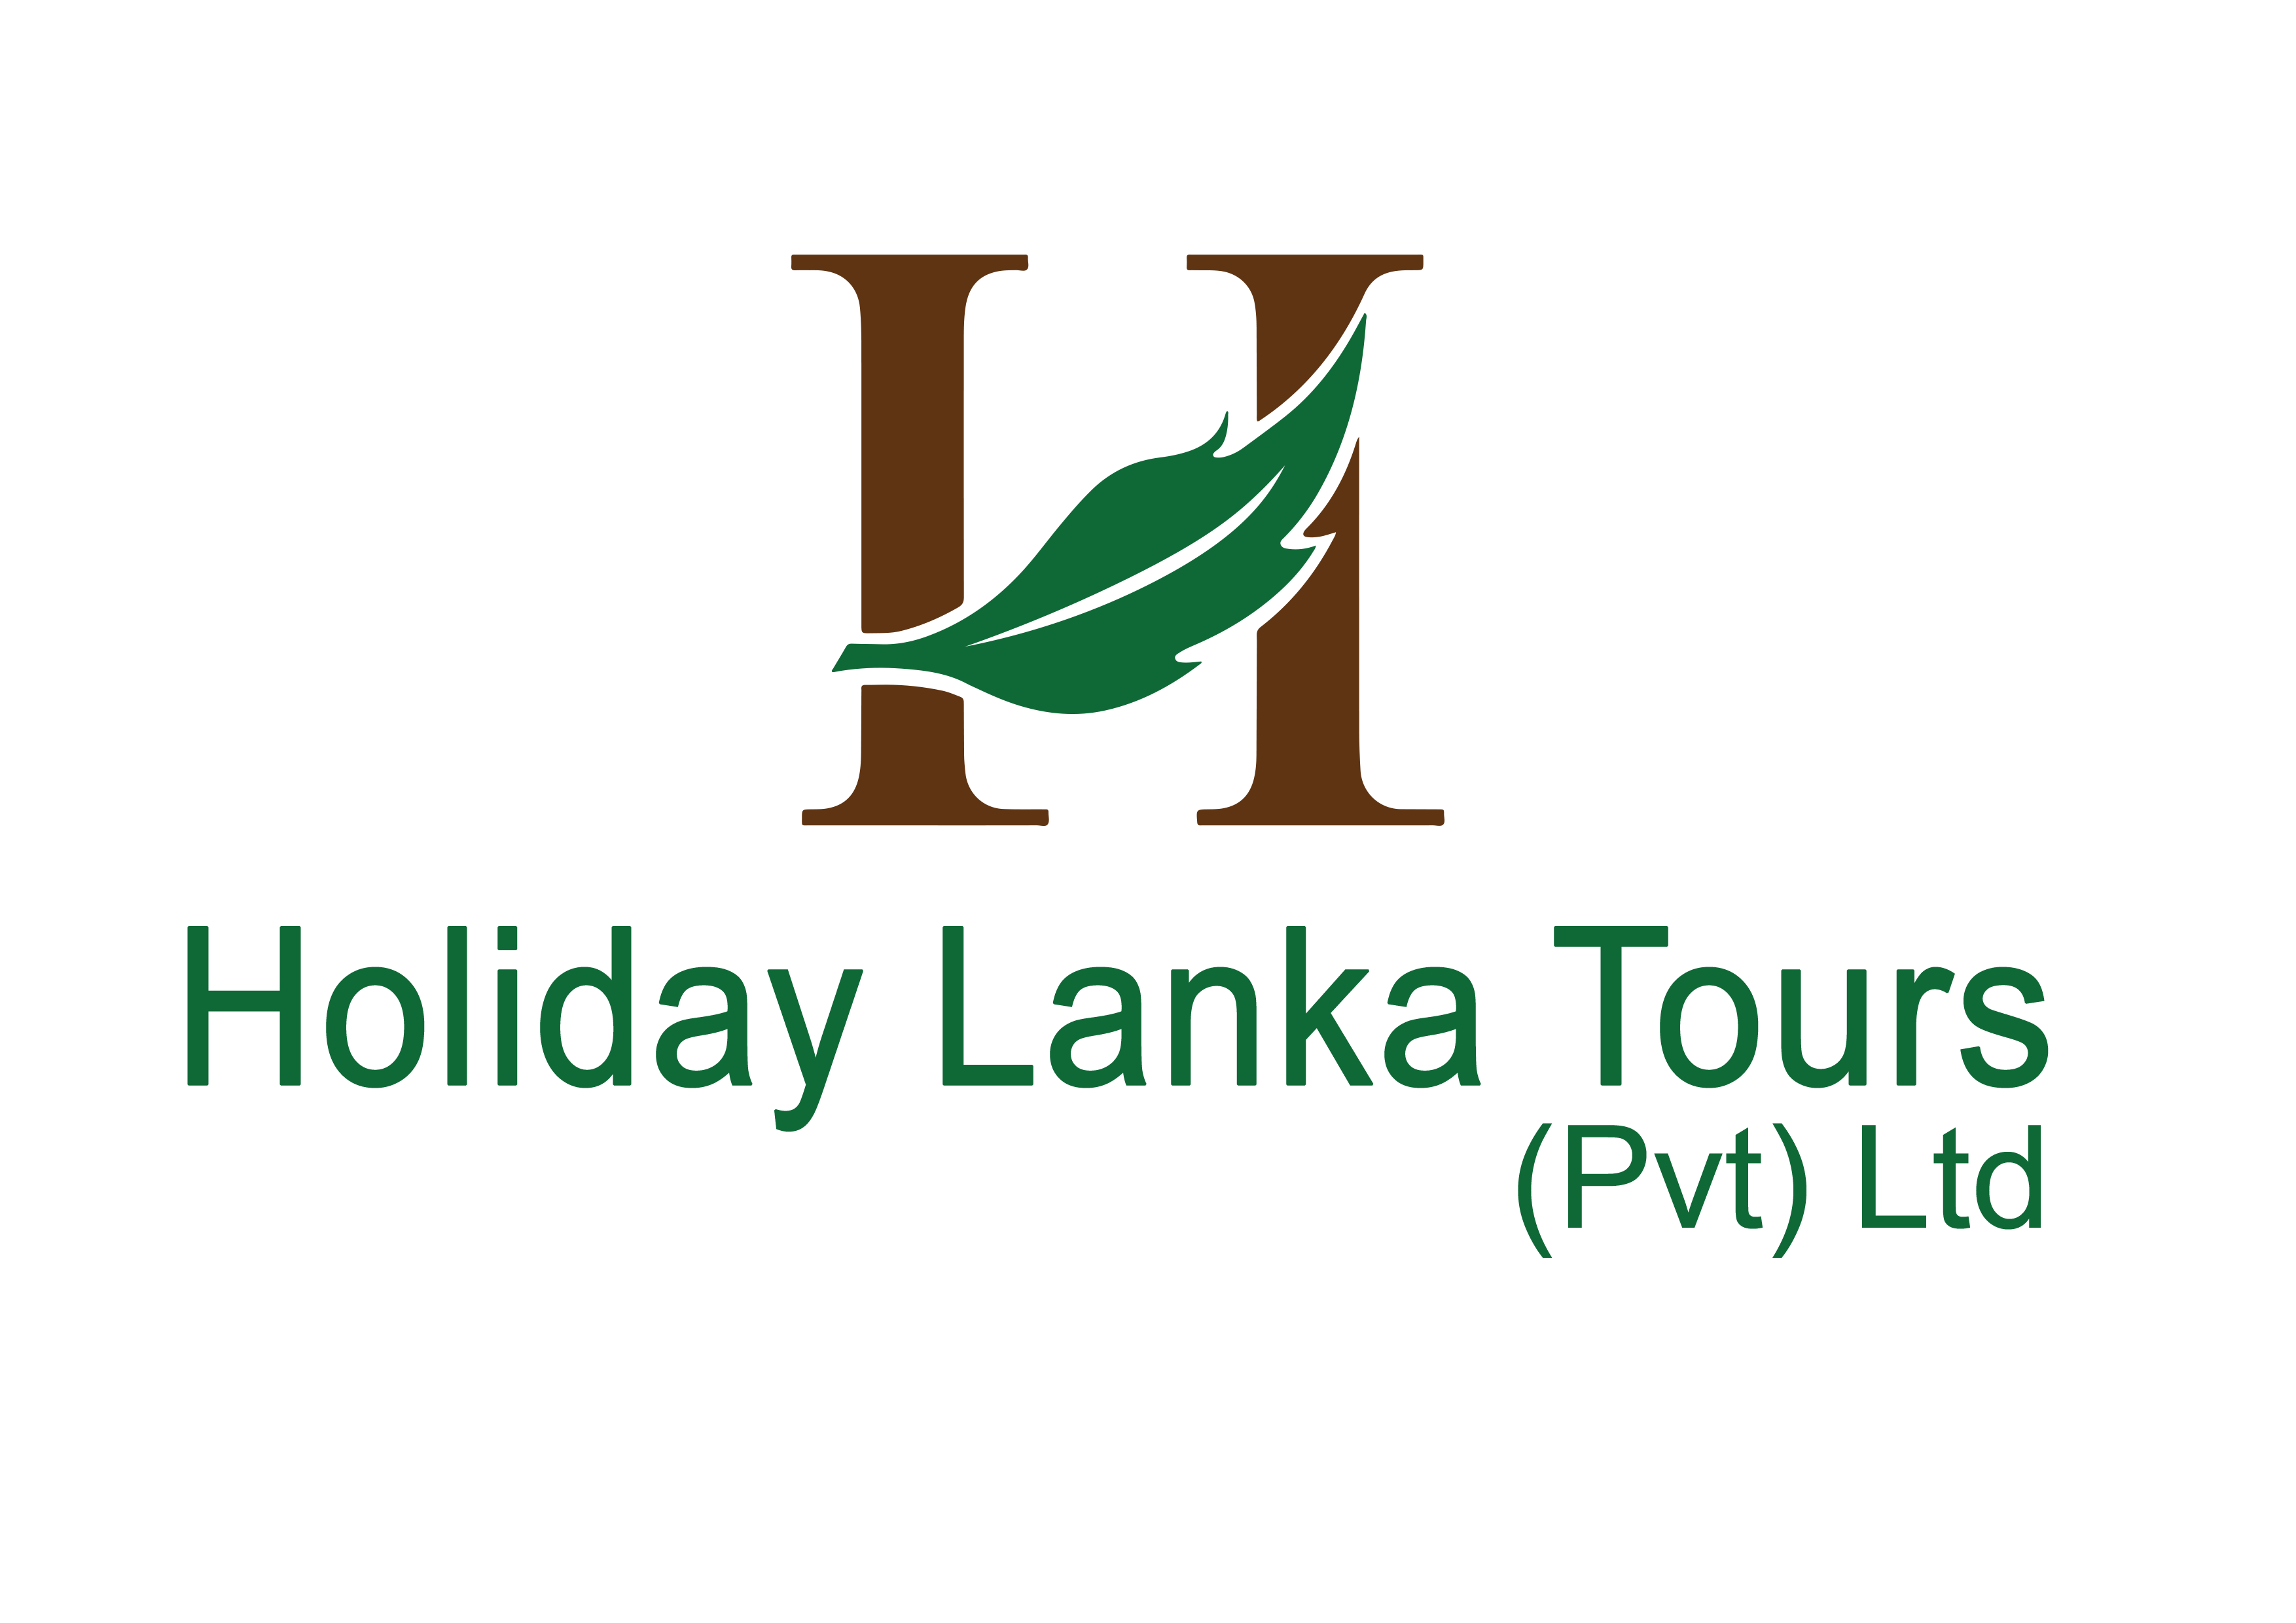 Holiday Lanka Tours (Pvt) Ltd